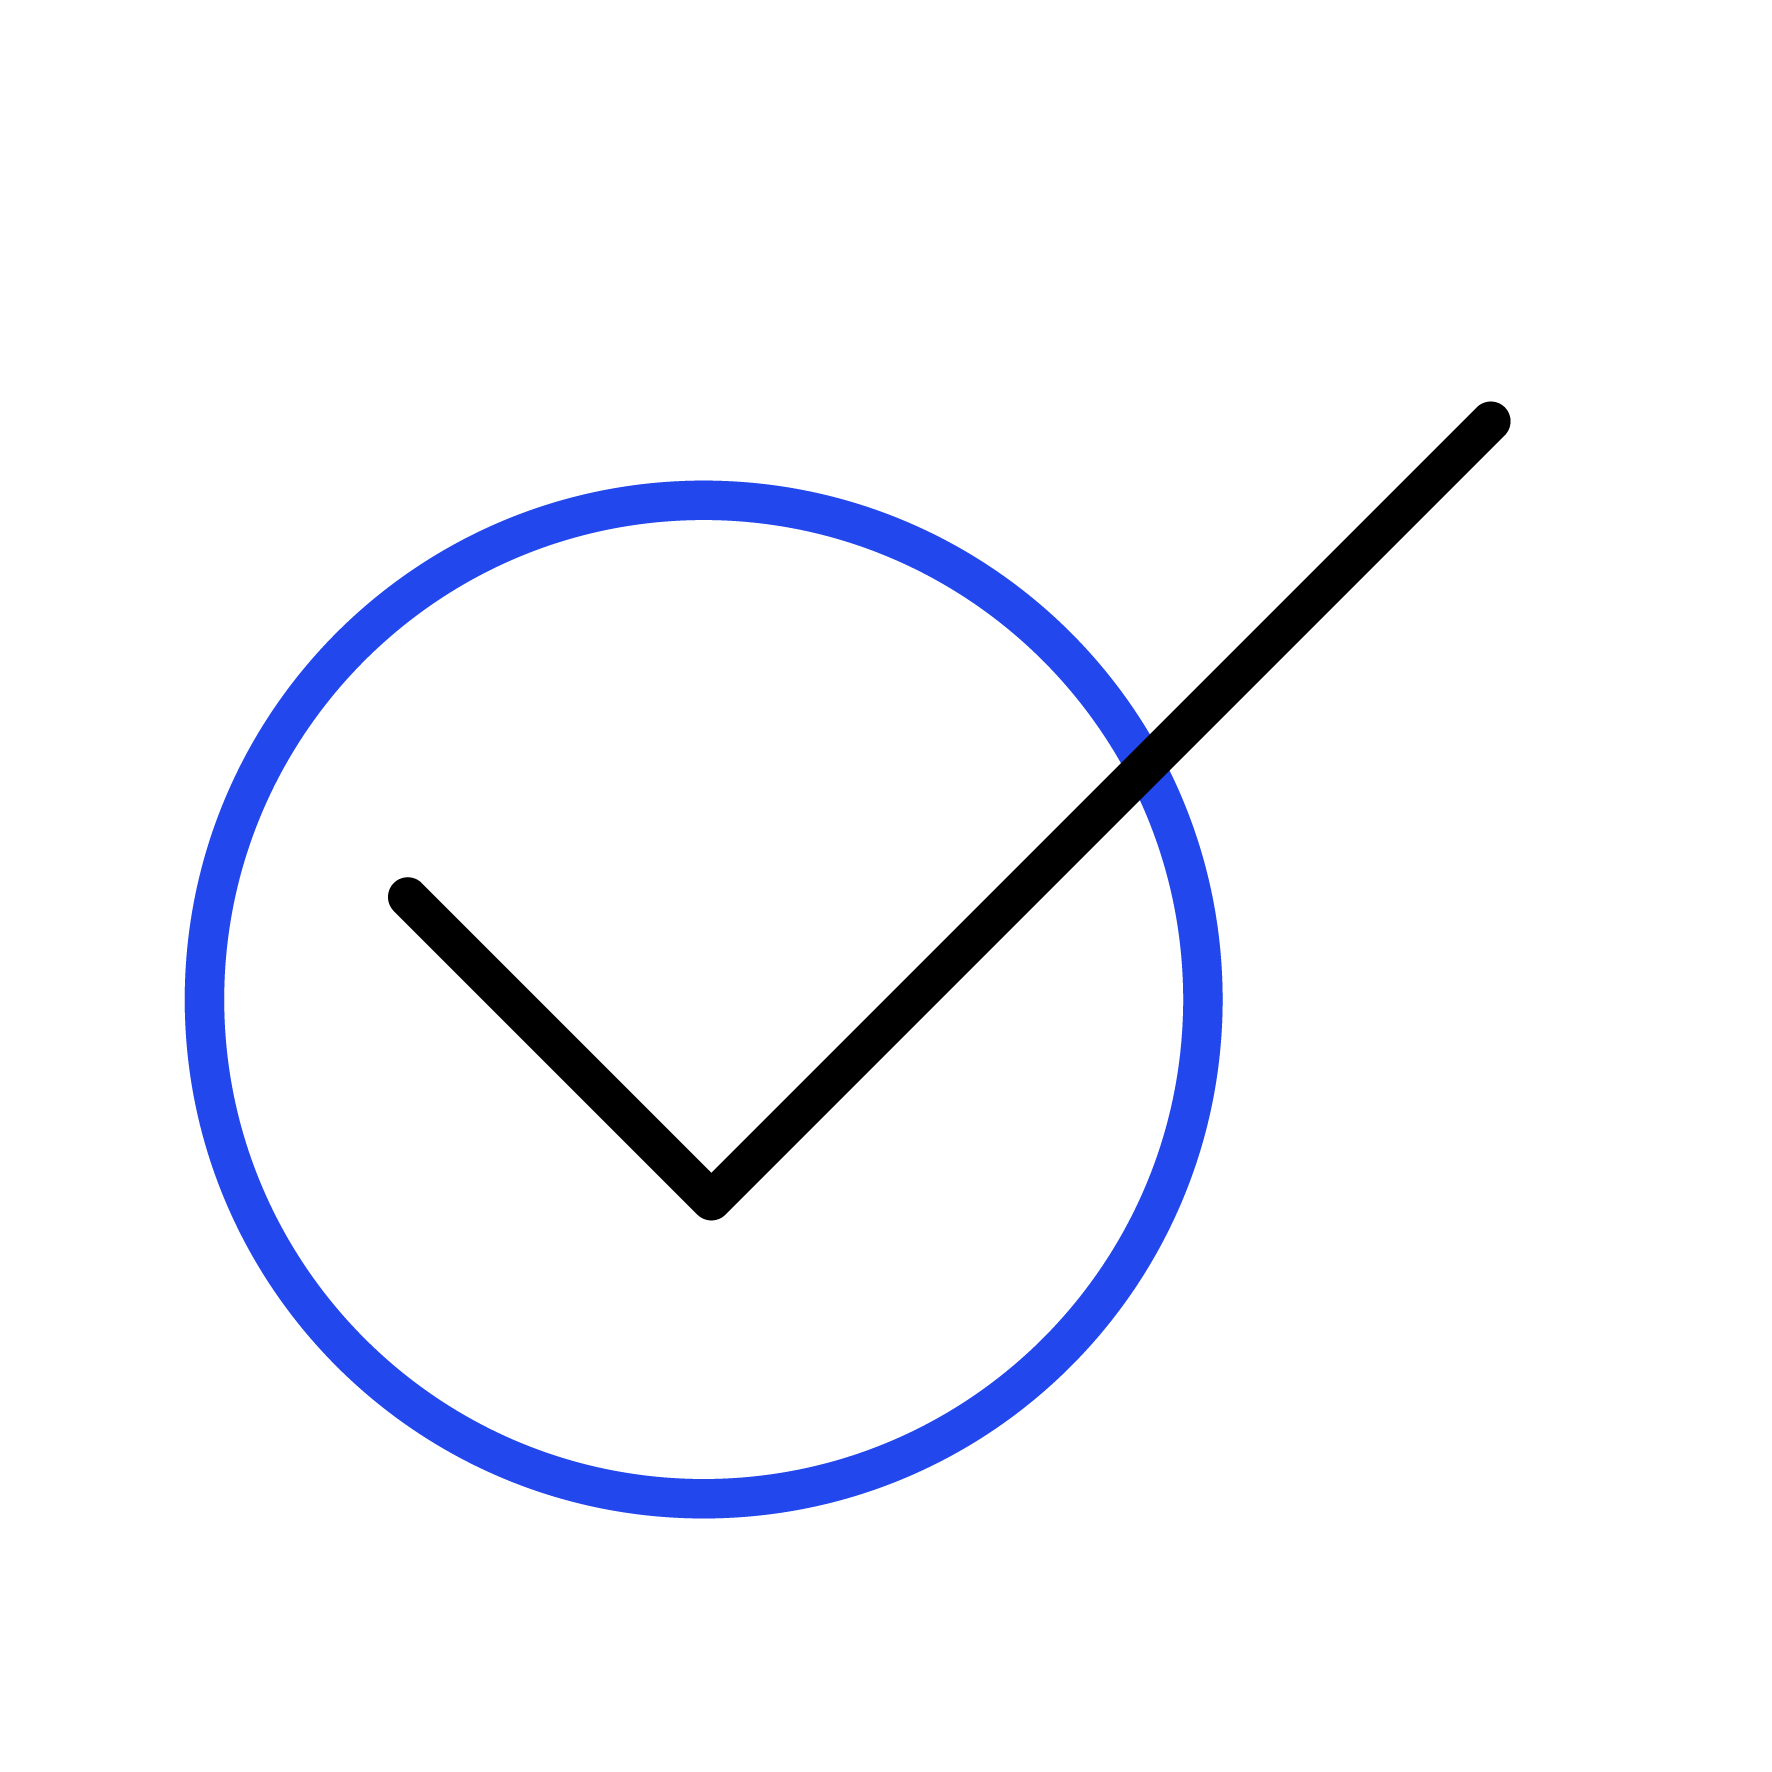 Tick symbol inside a circle box